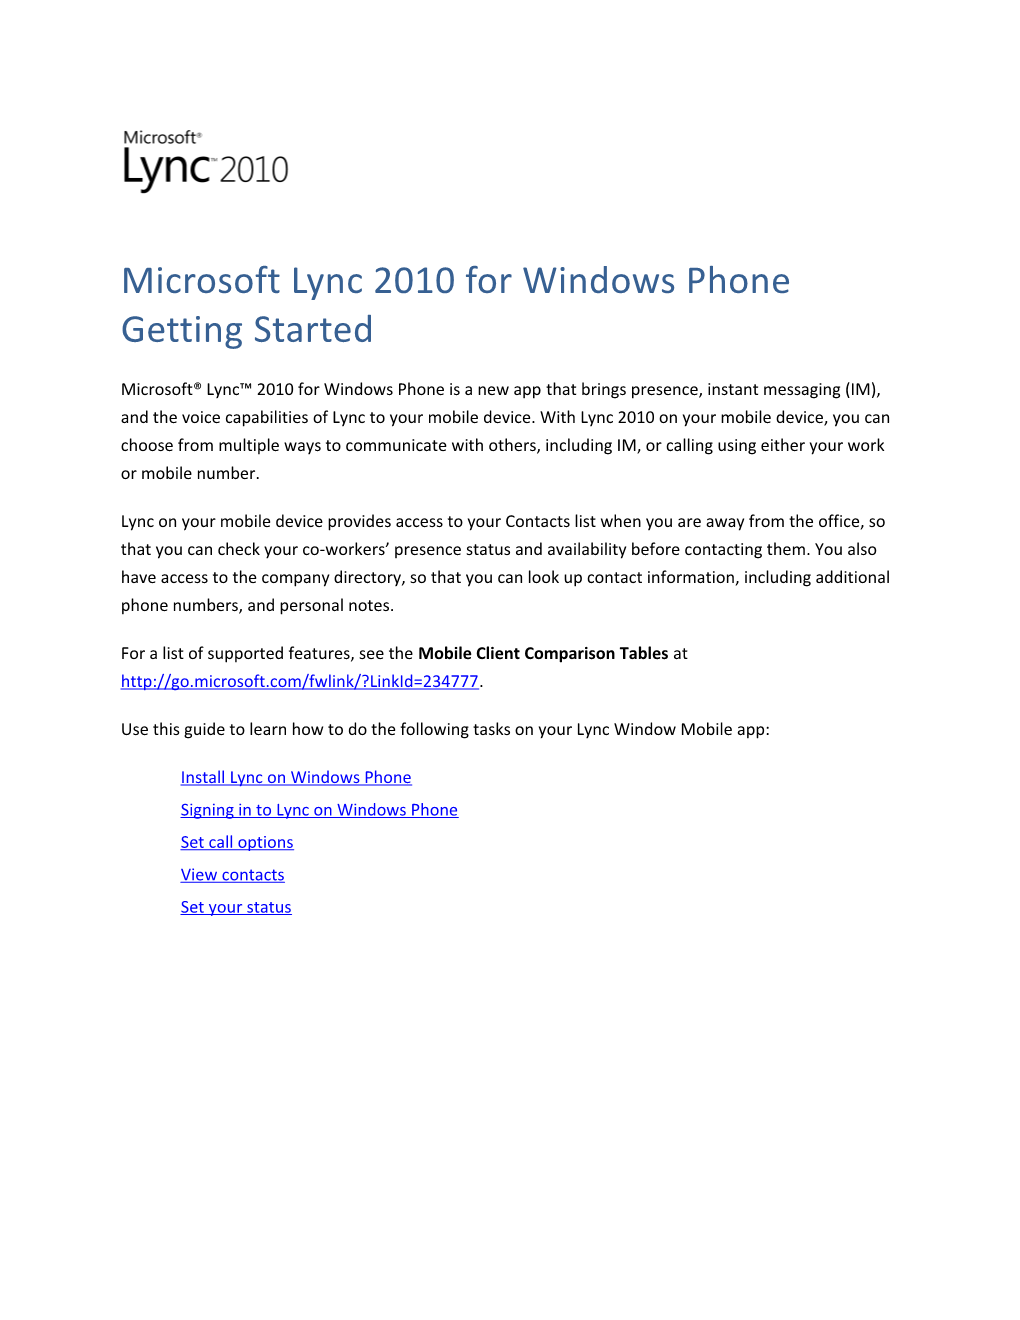 Microsoft Lync 2010 for Windows Phone Getting Started